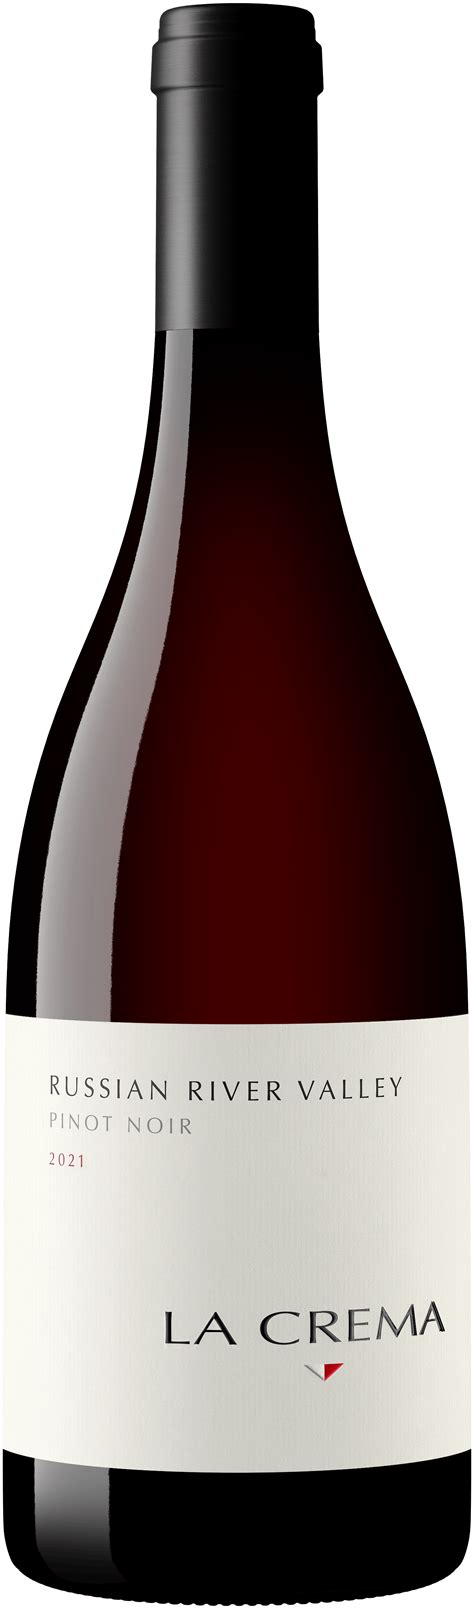 La Crema Russian River Valley Pinot Noir 2021 750ml The Grape Tray